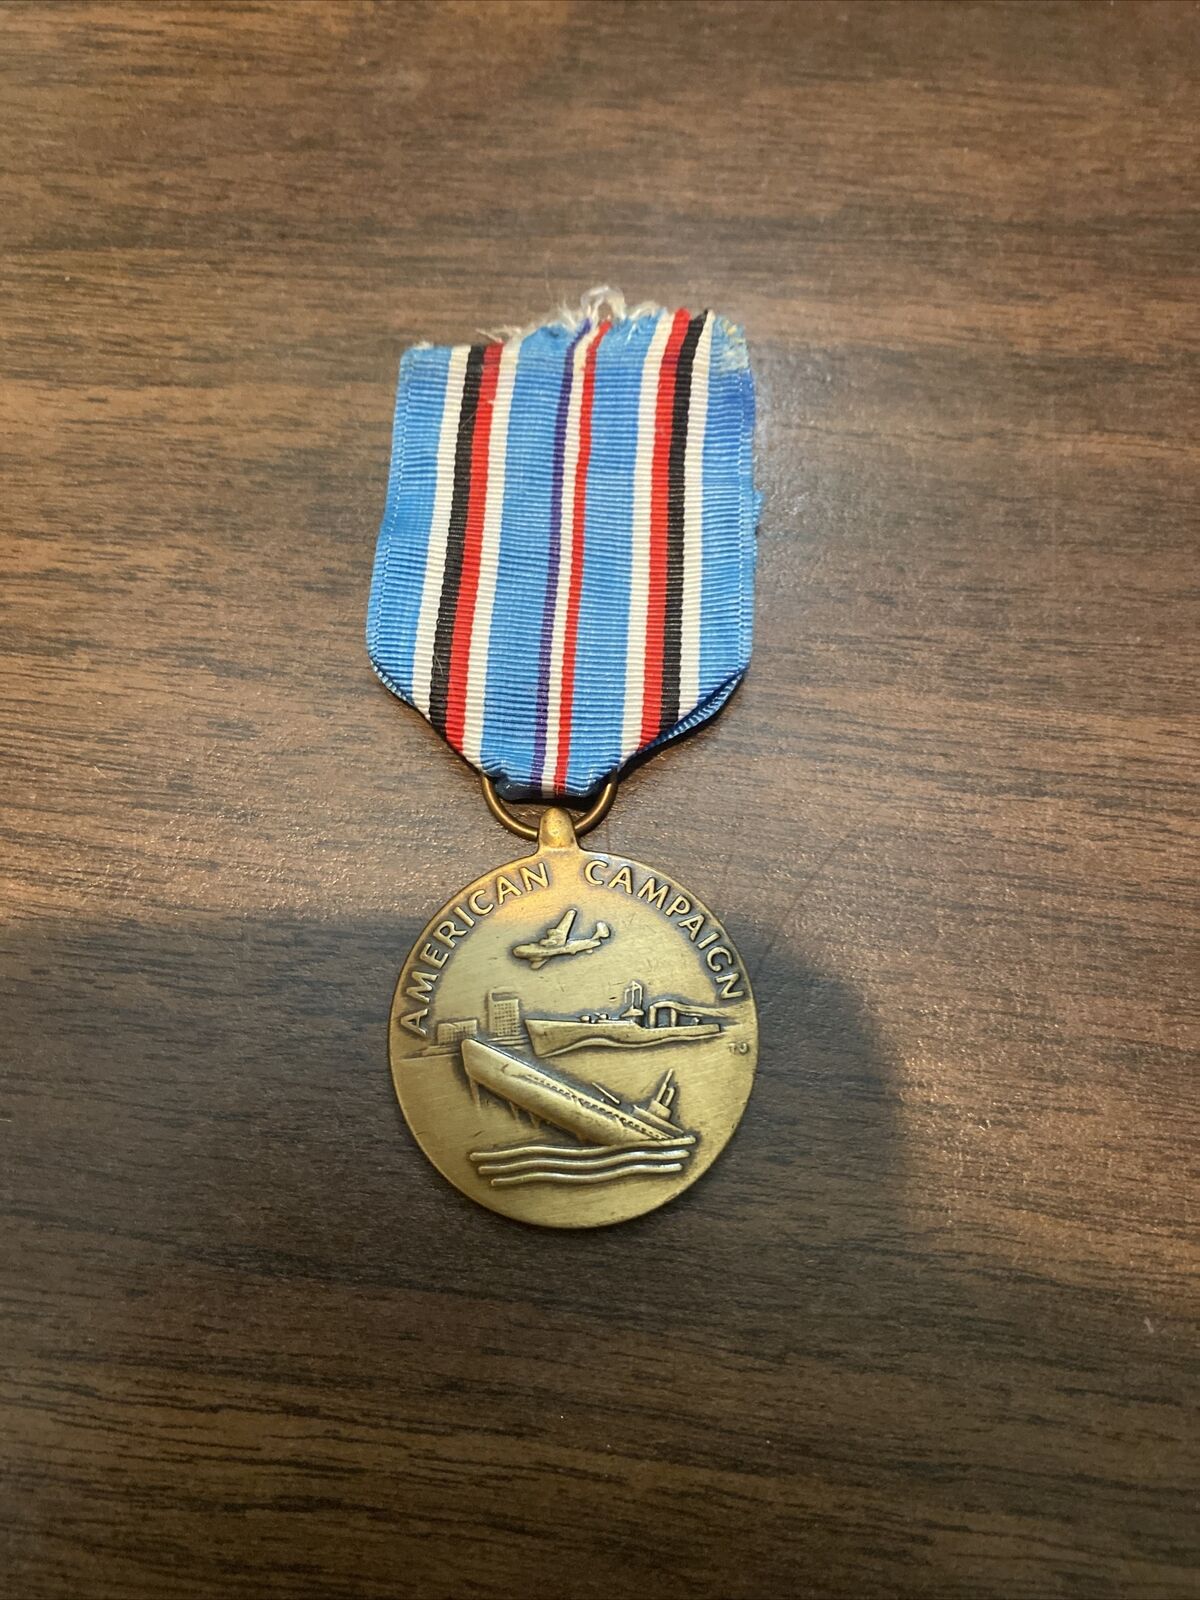 american campaign medal ribbon